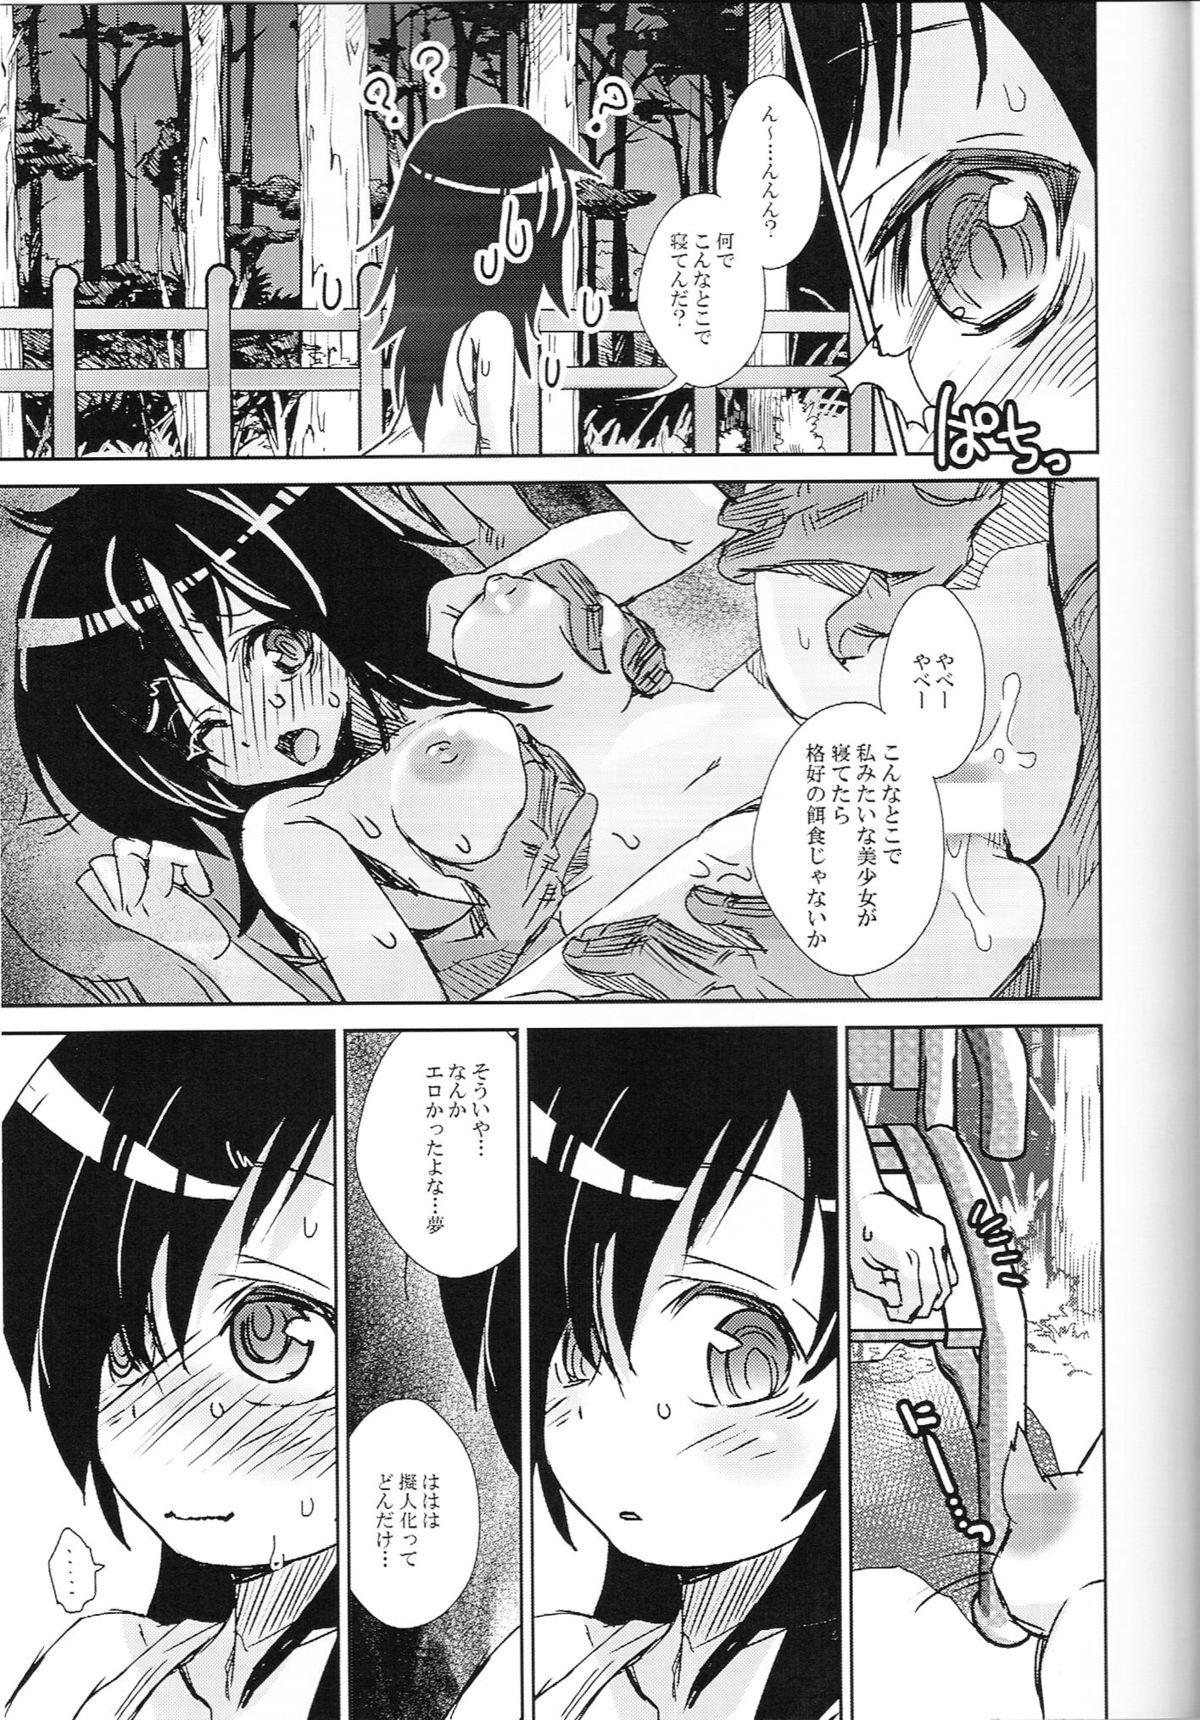 Analfuck Watashi ga Moteru noha Neko ni dake! - Its not my fault that im not popular Animation - Page 12